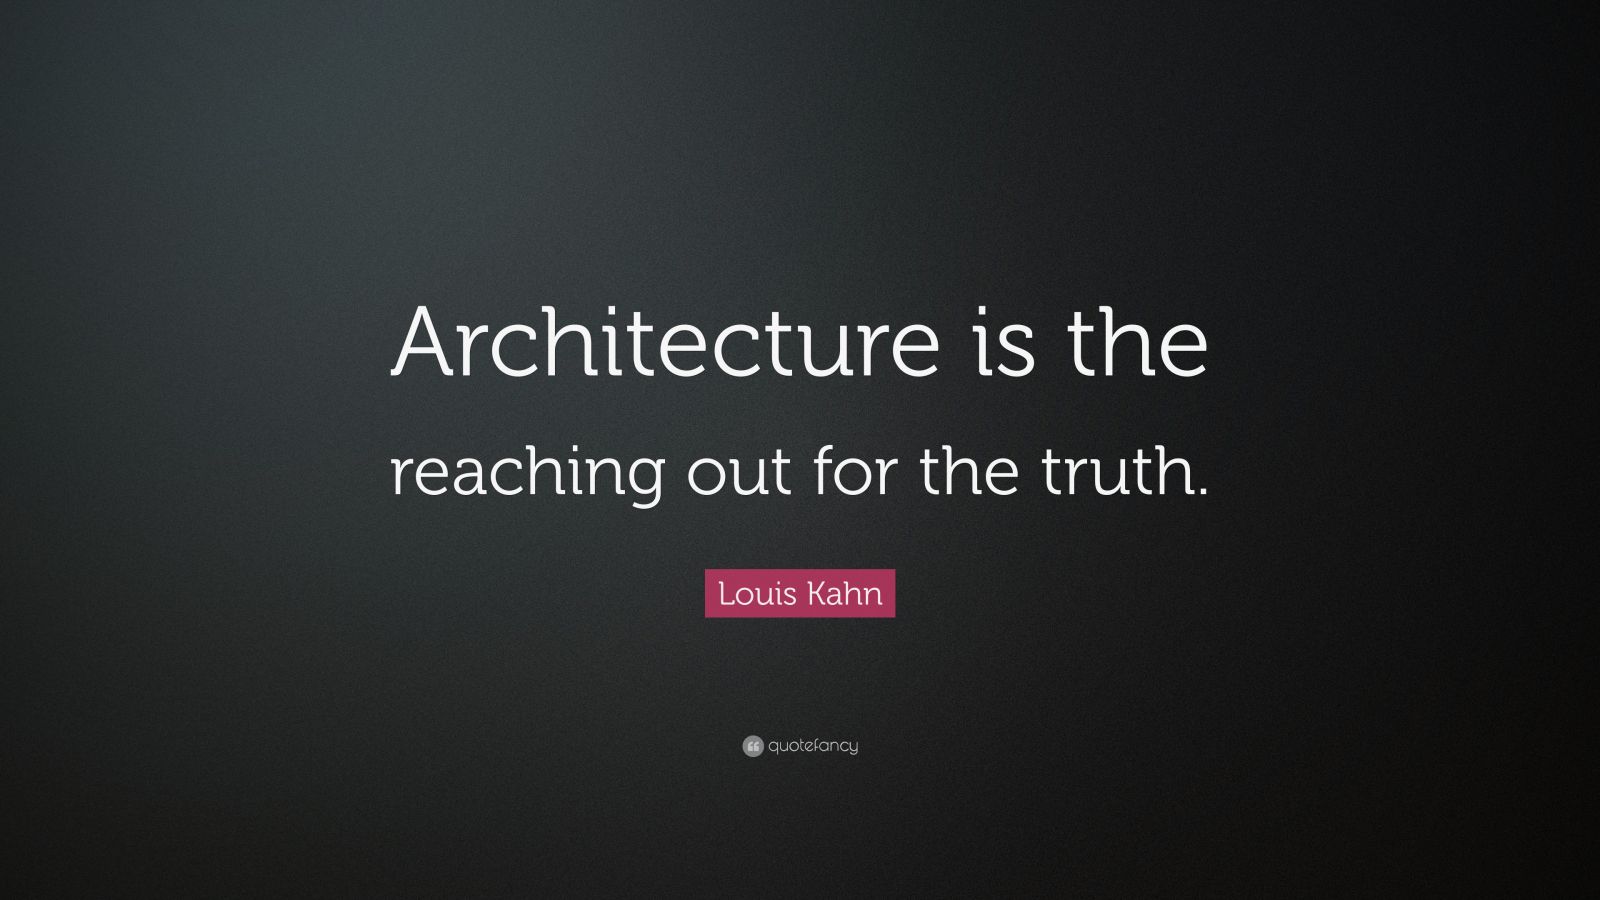 Louis Kahn Quotes (34 wallpapers) - Quotefancy